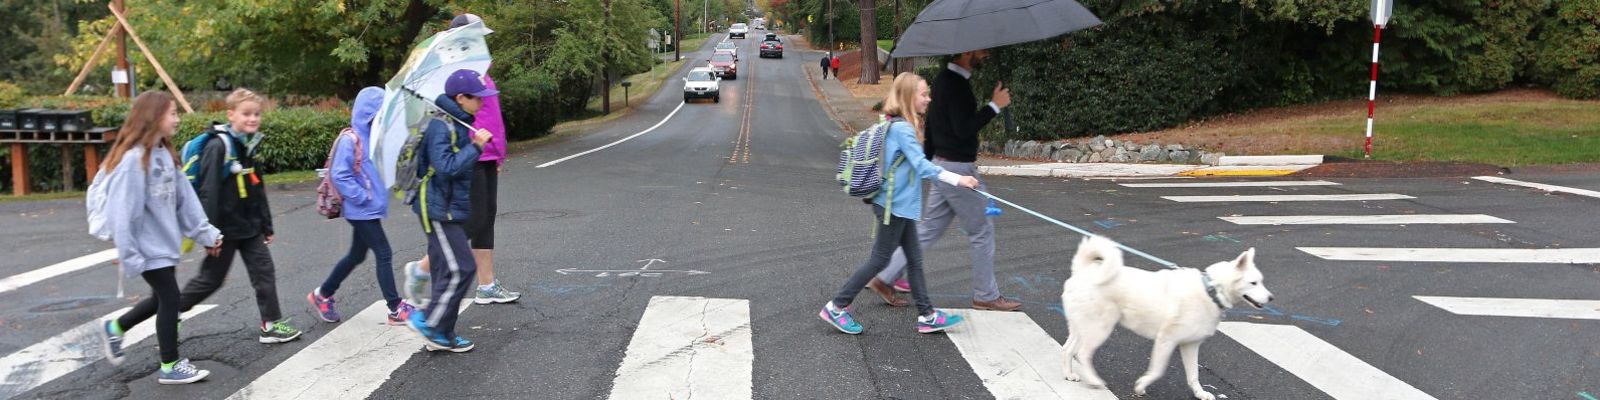 Pedestrians walking to school